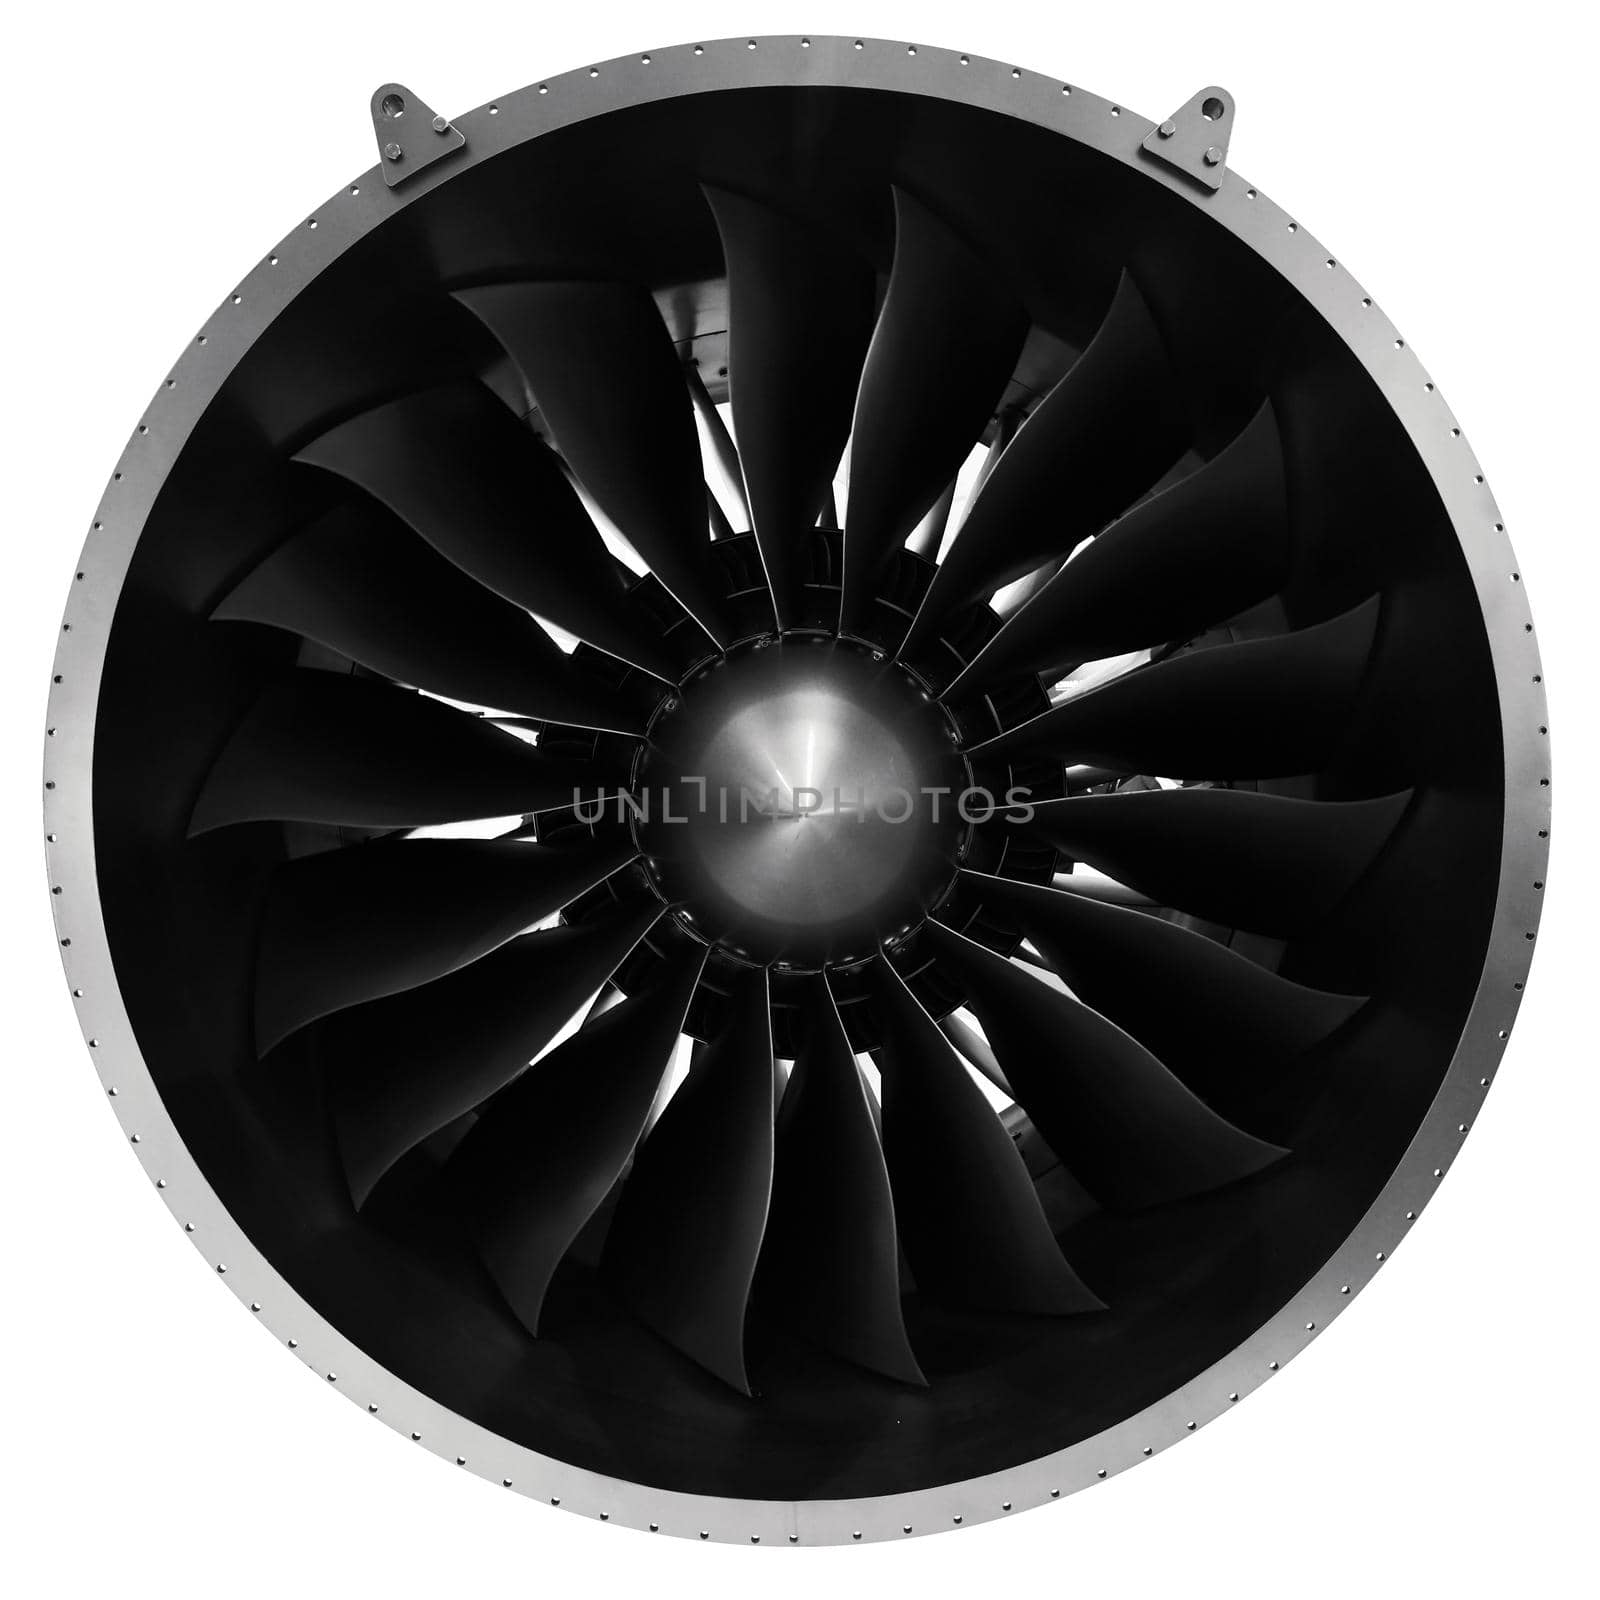 Modern turbofan engine. close up of turbojet of aircraft on white background.